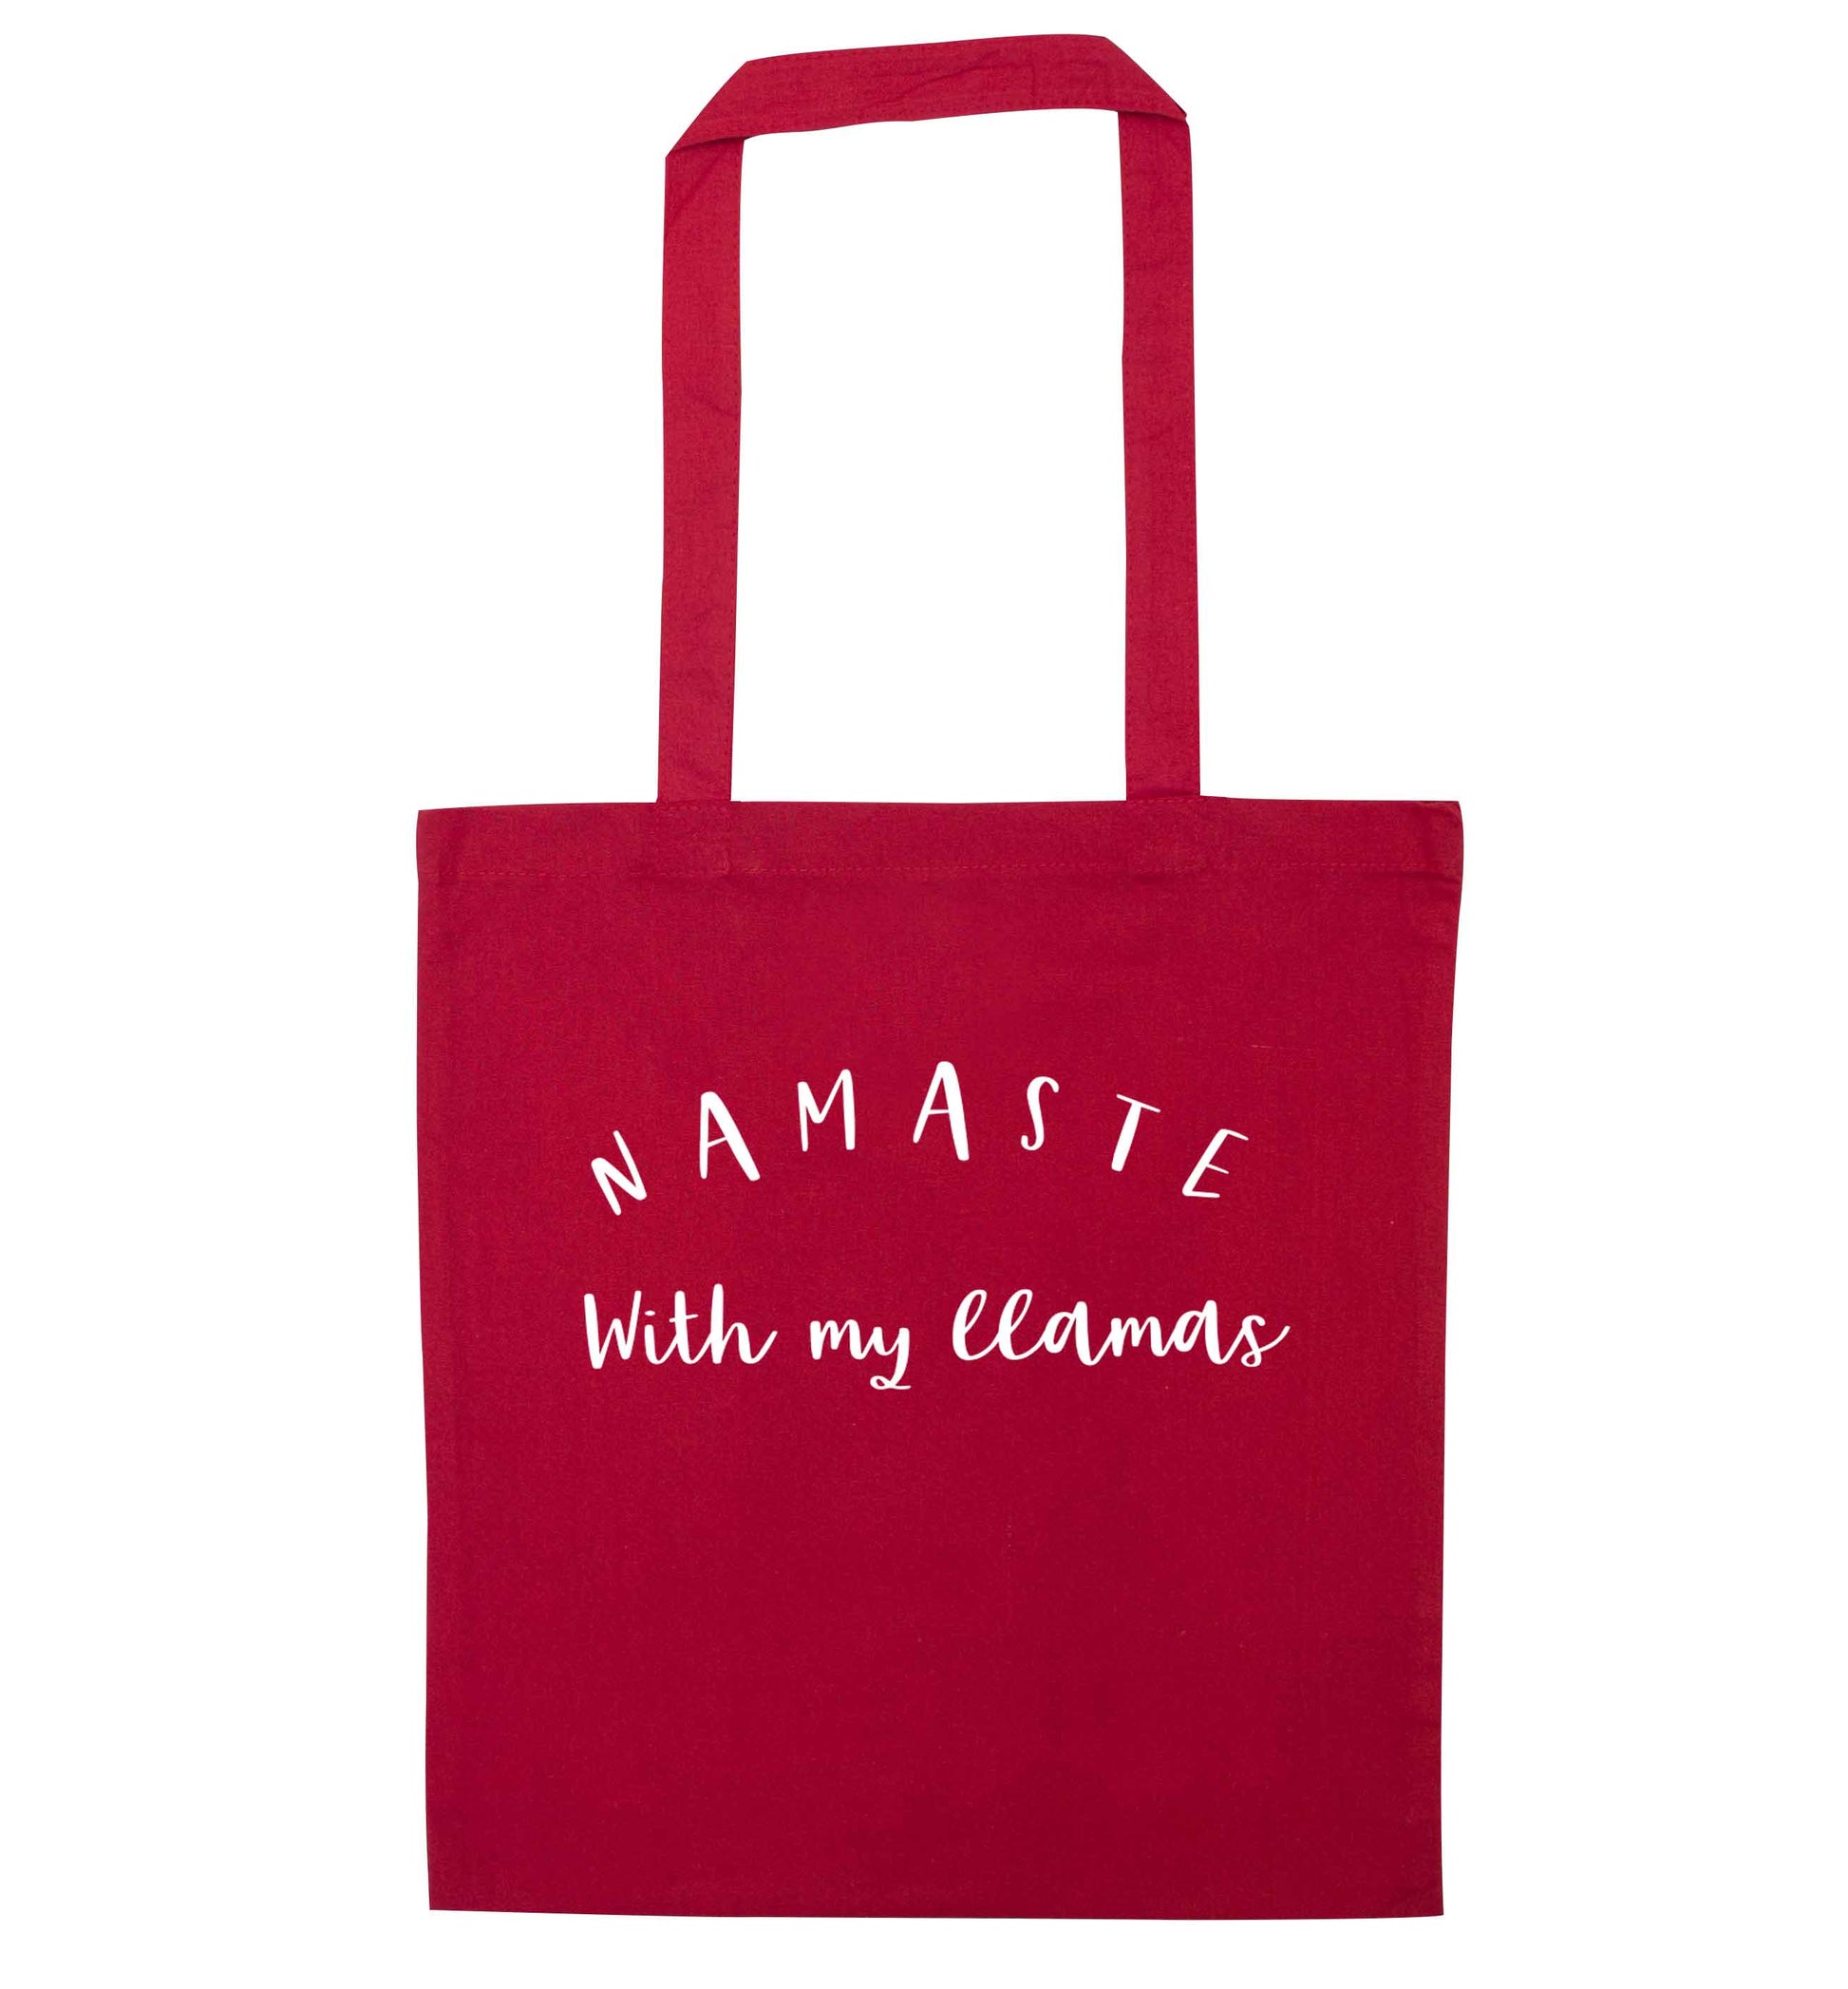 Namaste with my llamas red tote bag